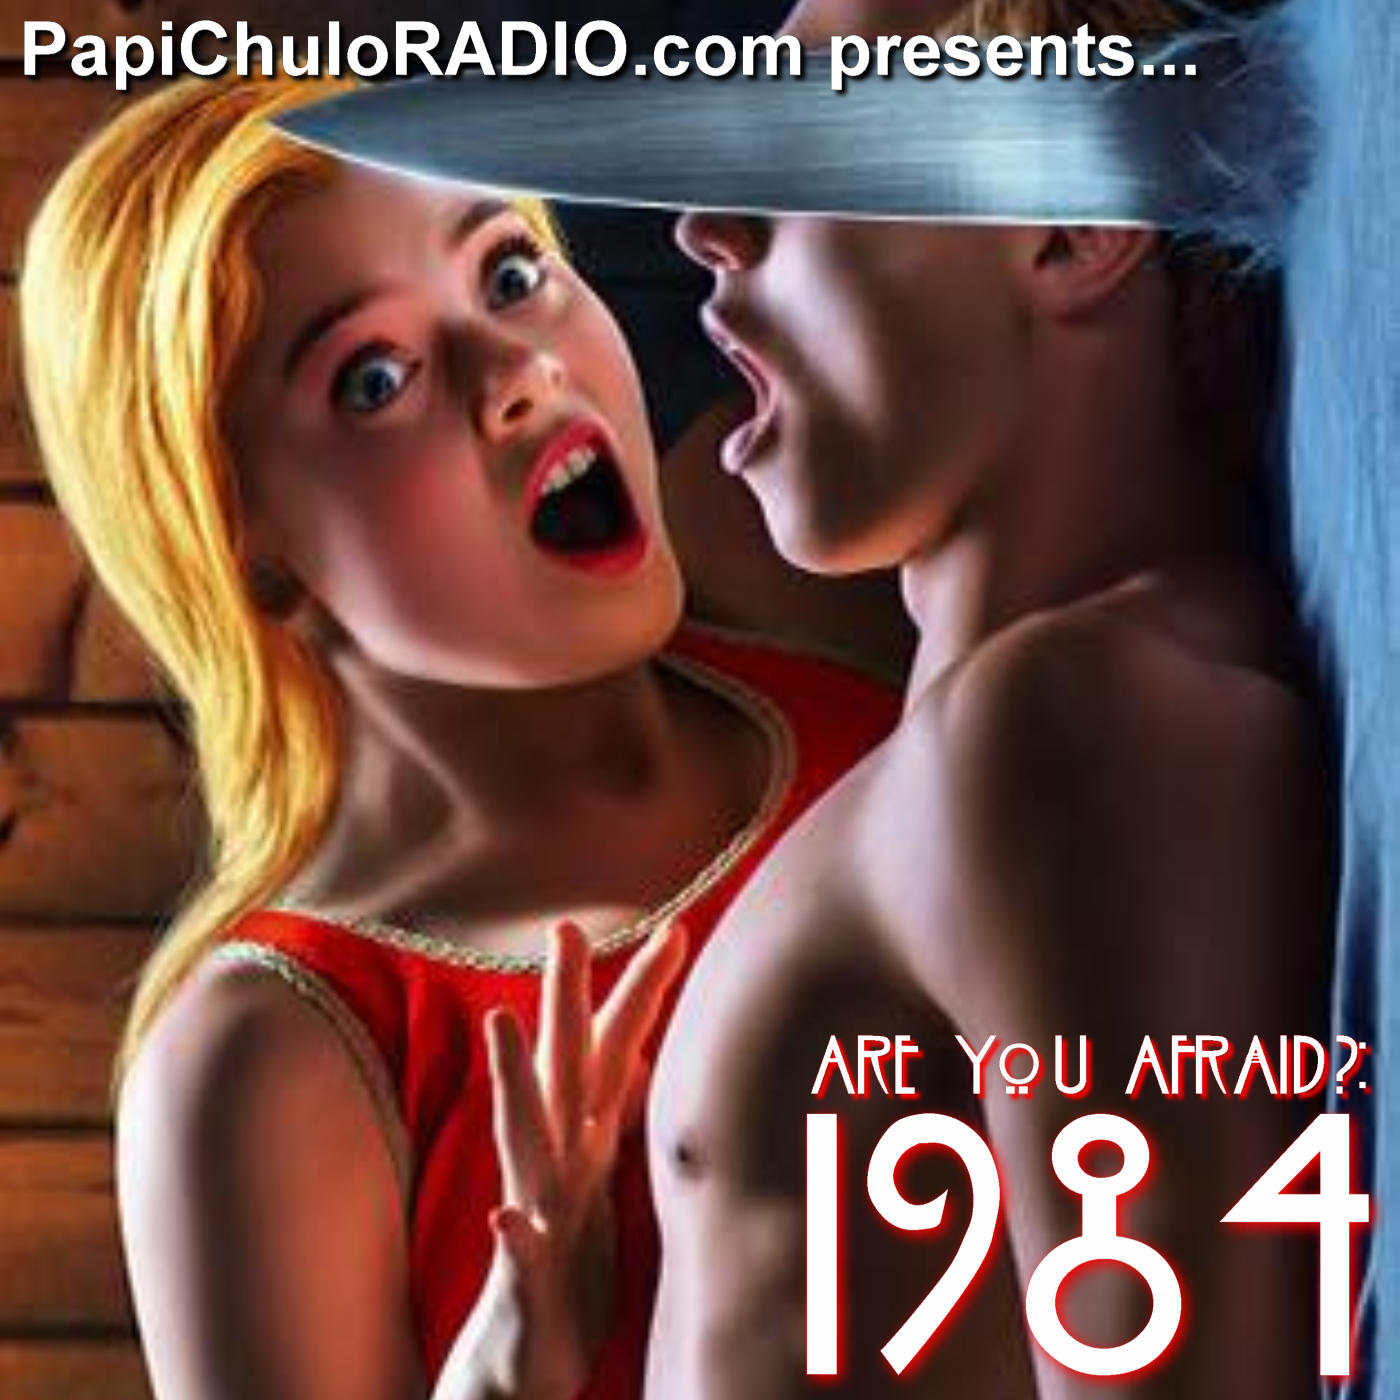 Are You Afraid?: 1984